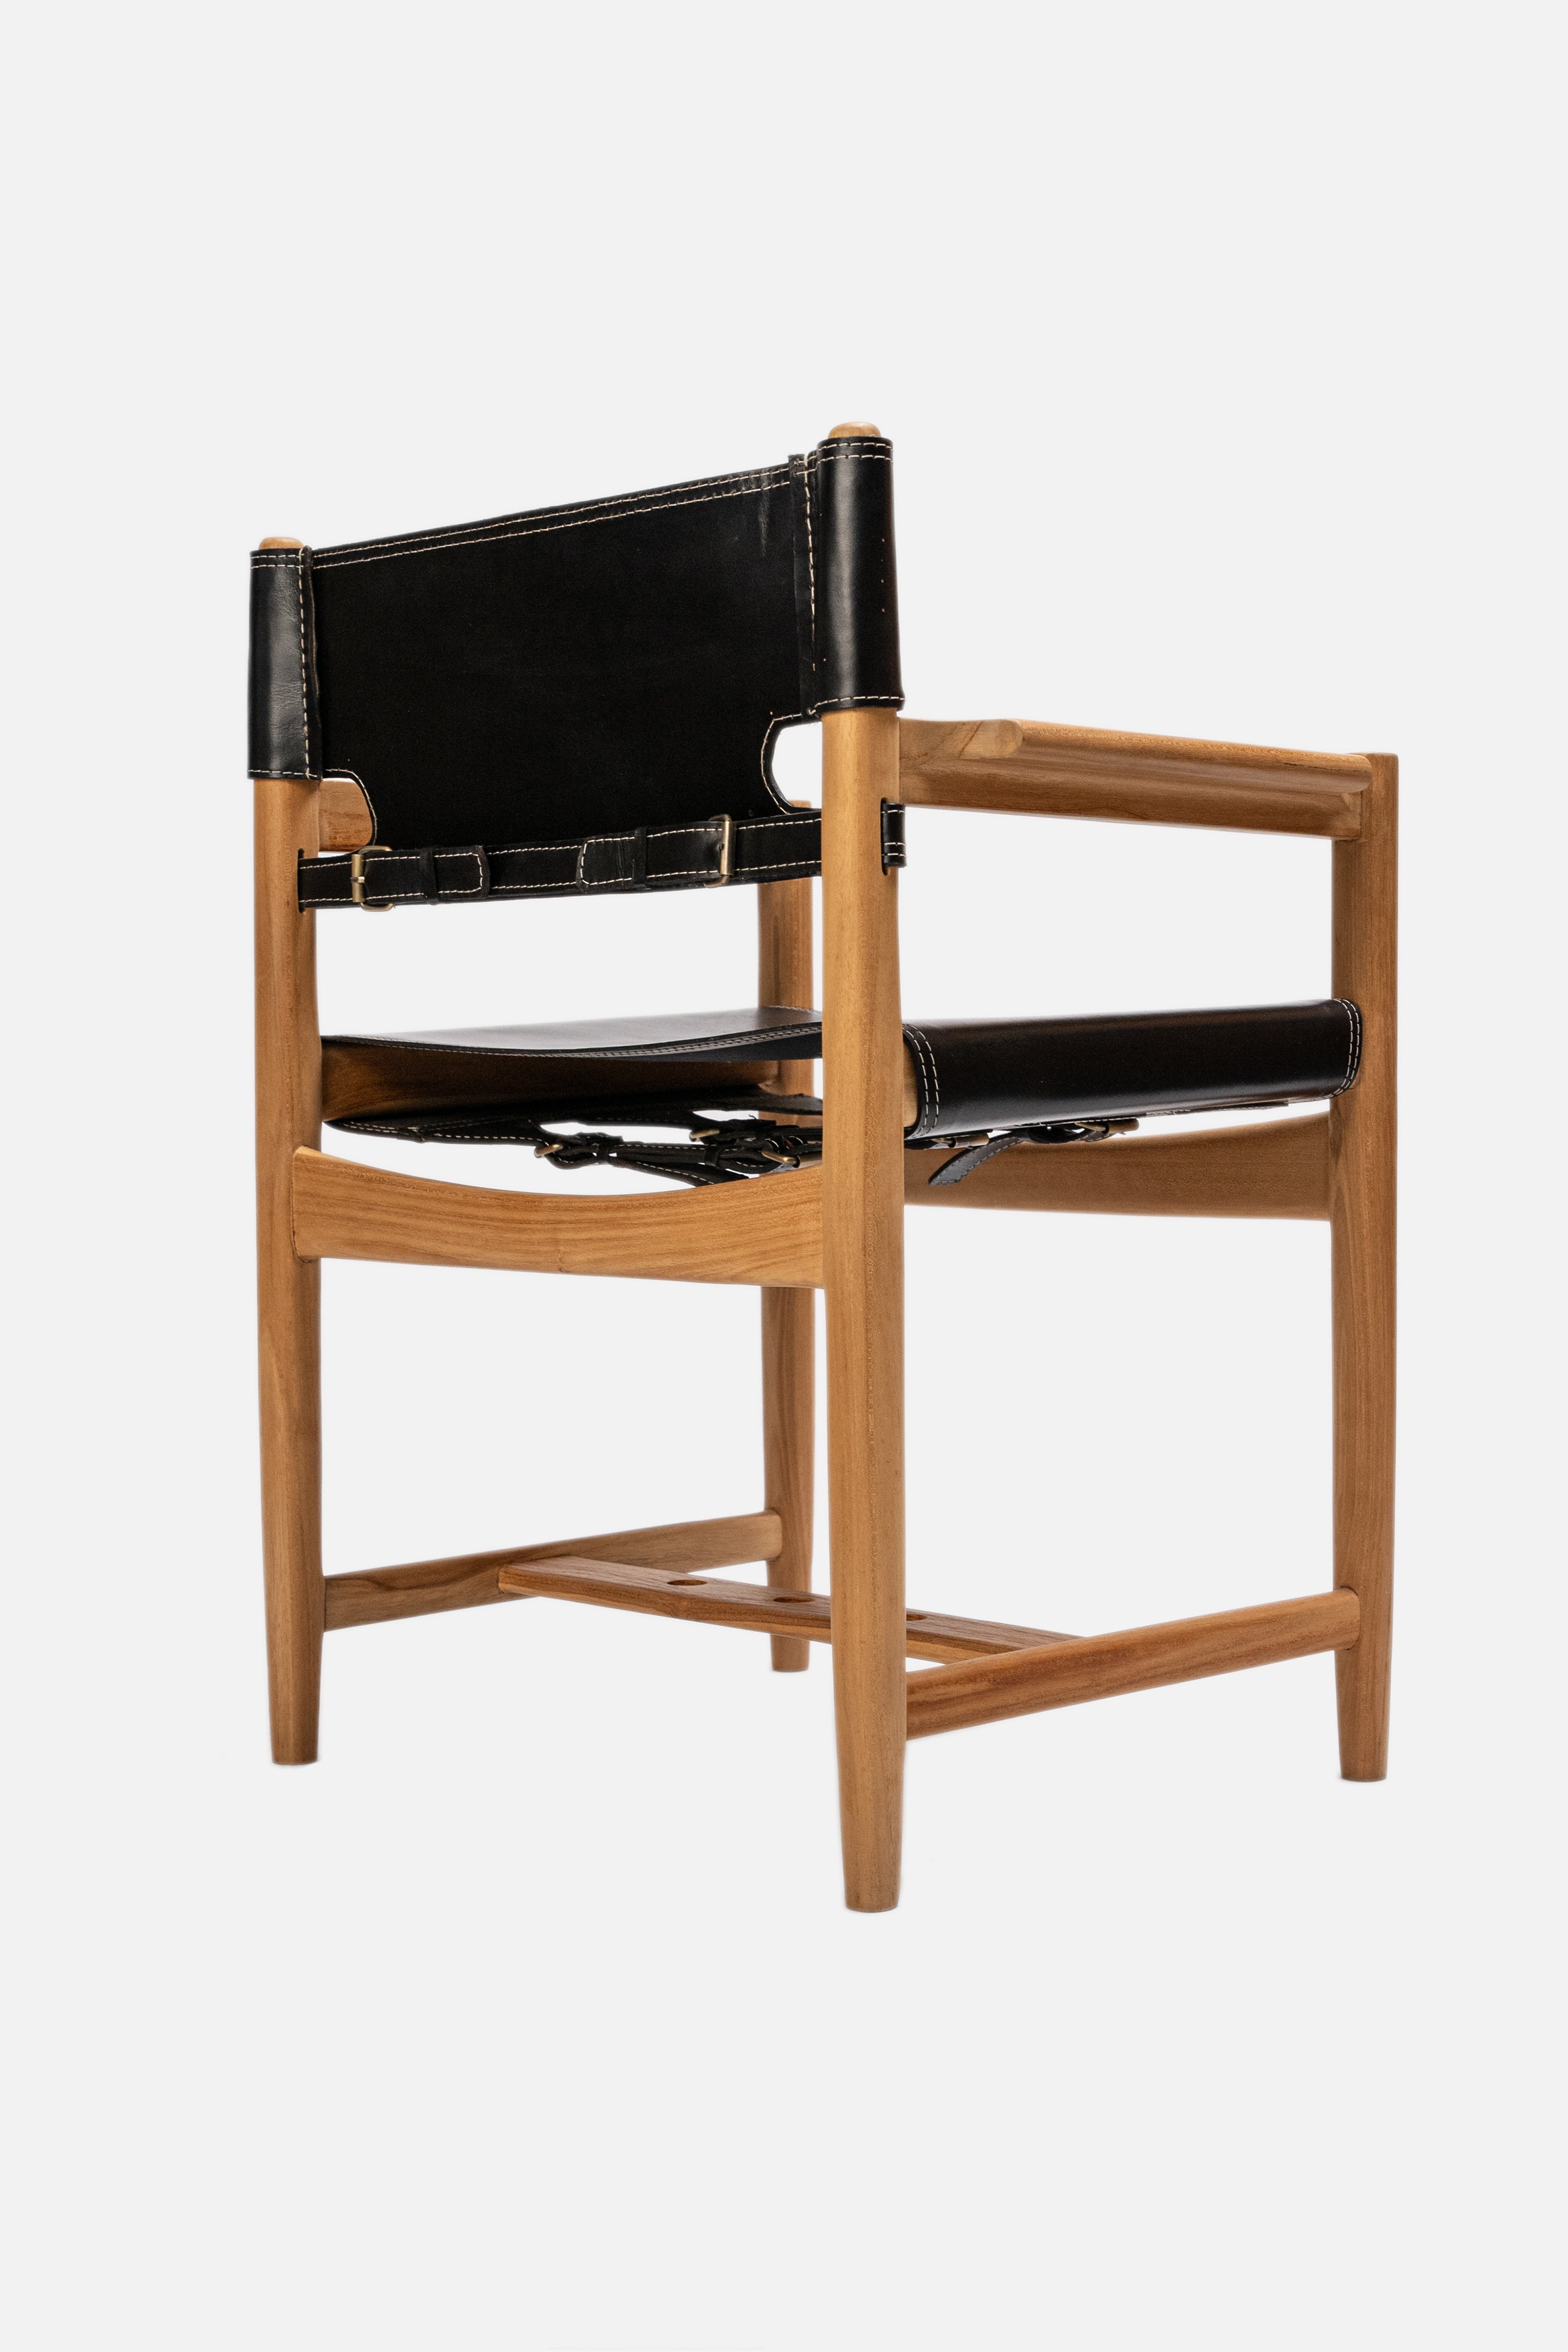 Rava Chair